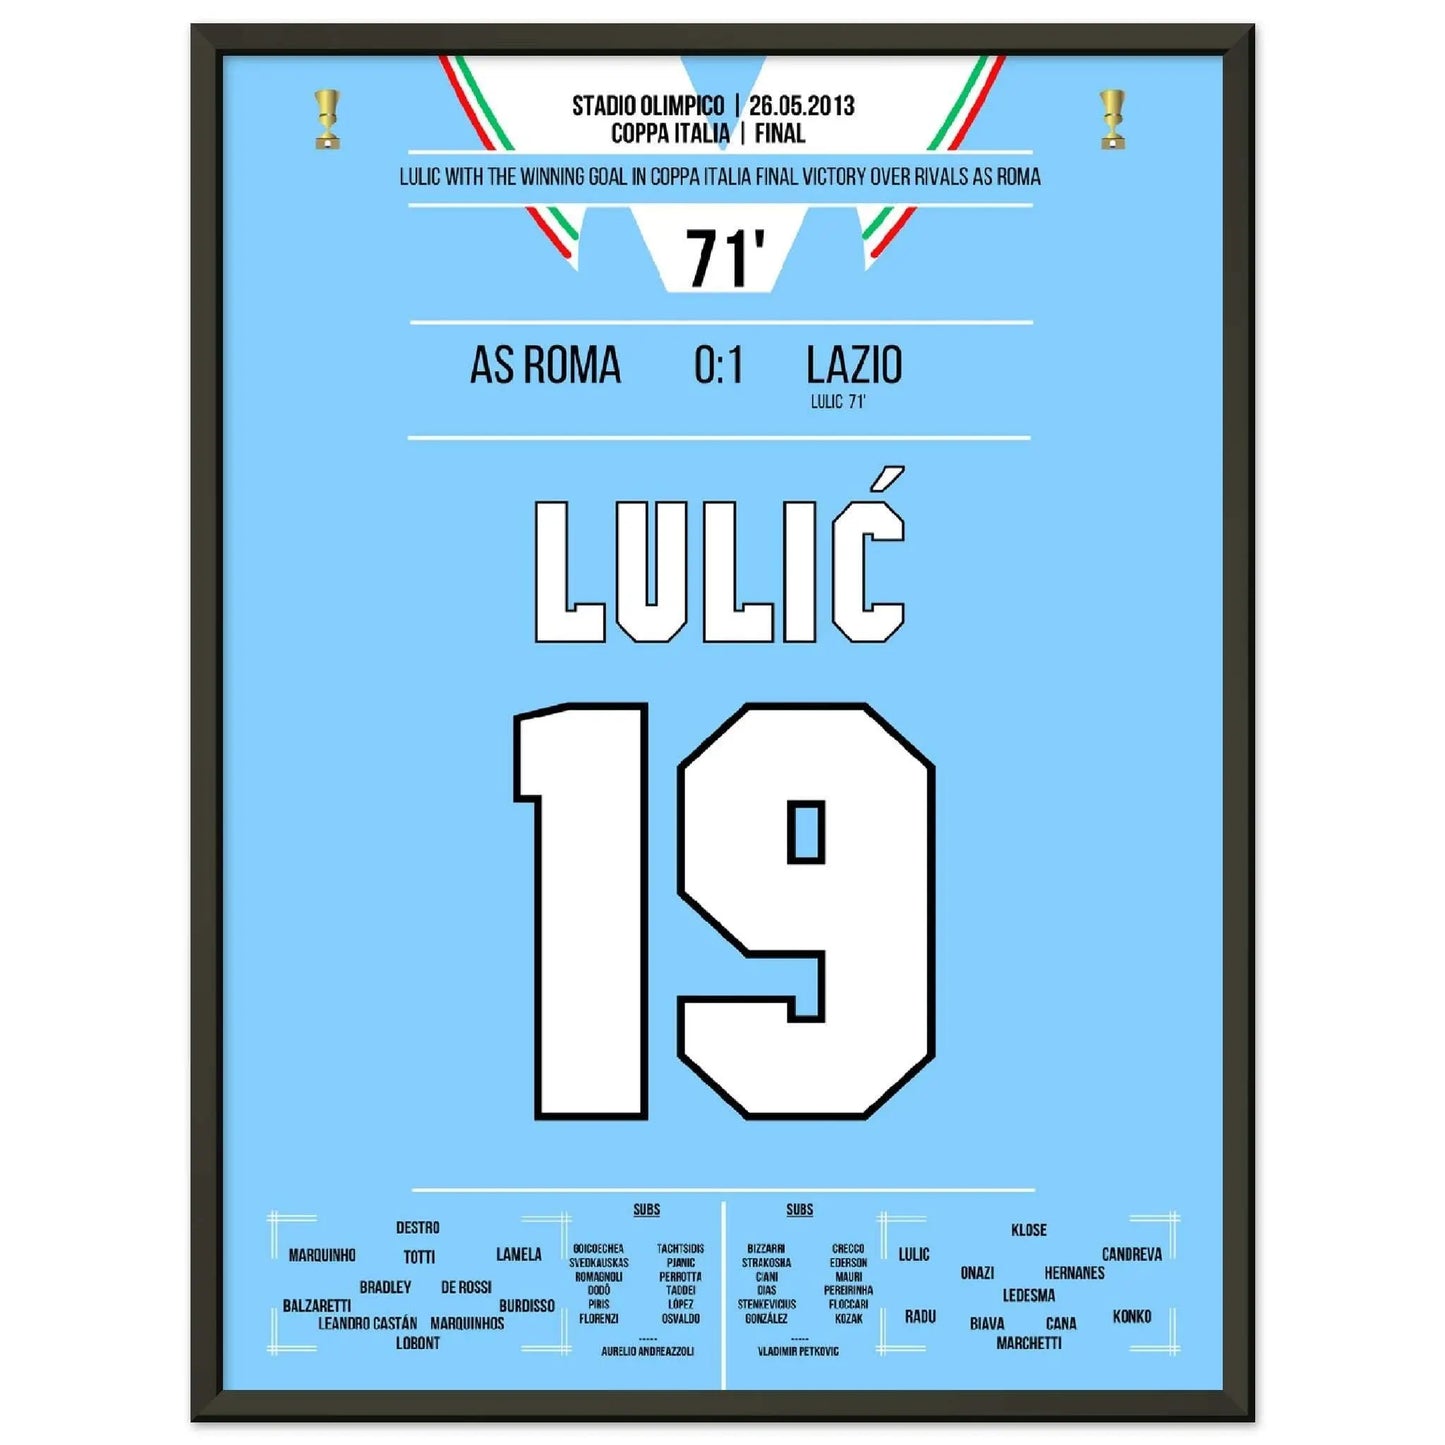 Lulic scores the winning goal in the 2013 Coppa Italia final